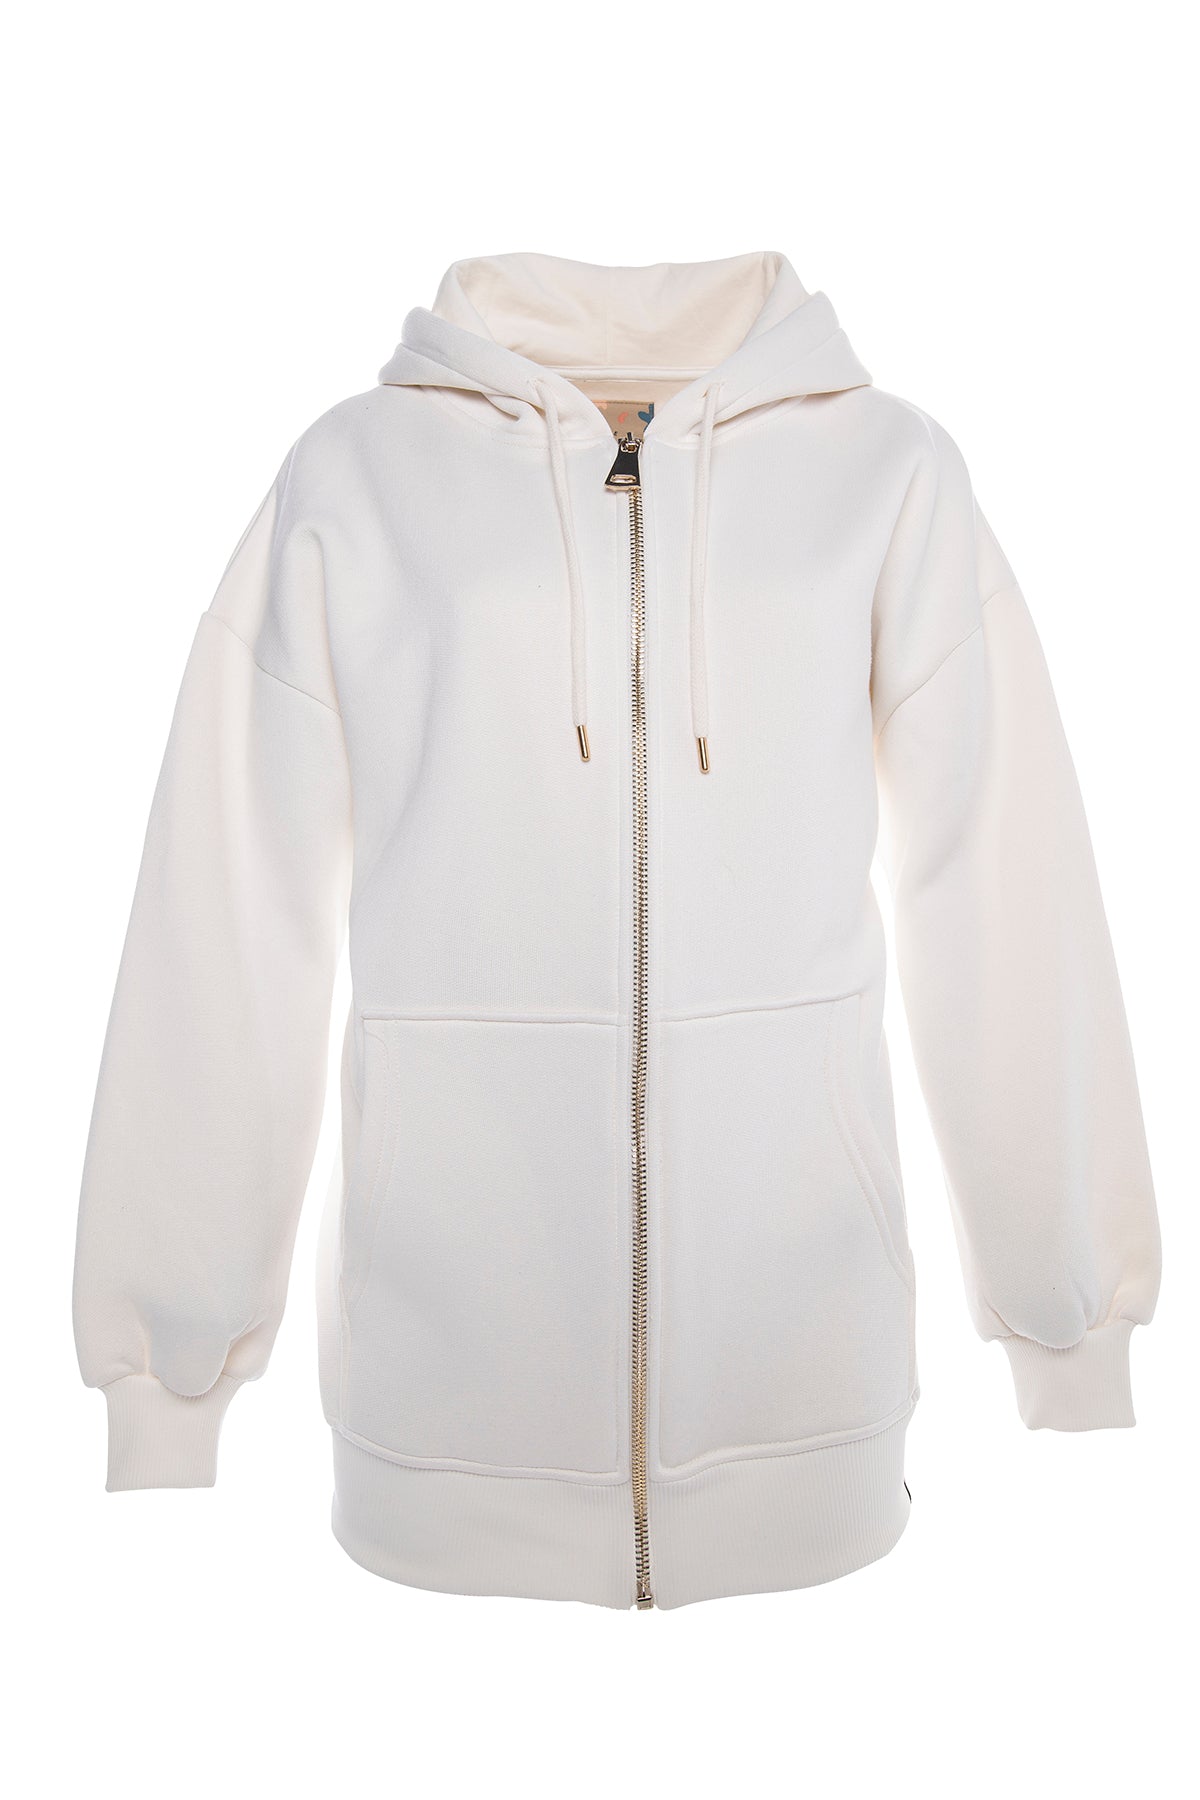 Oversize front zip hoodie in rice white.